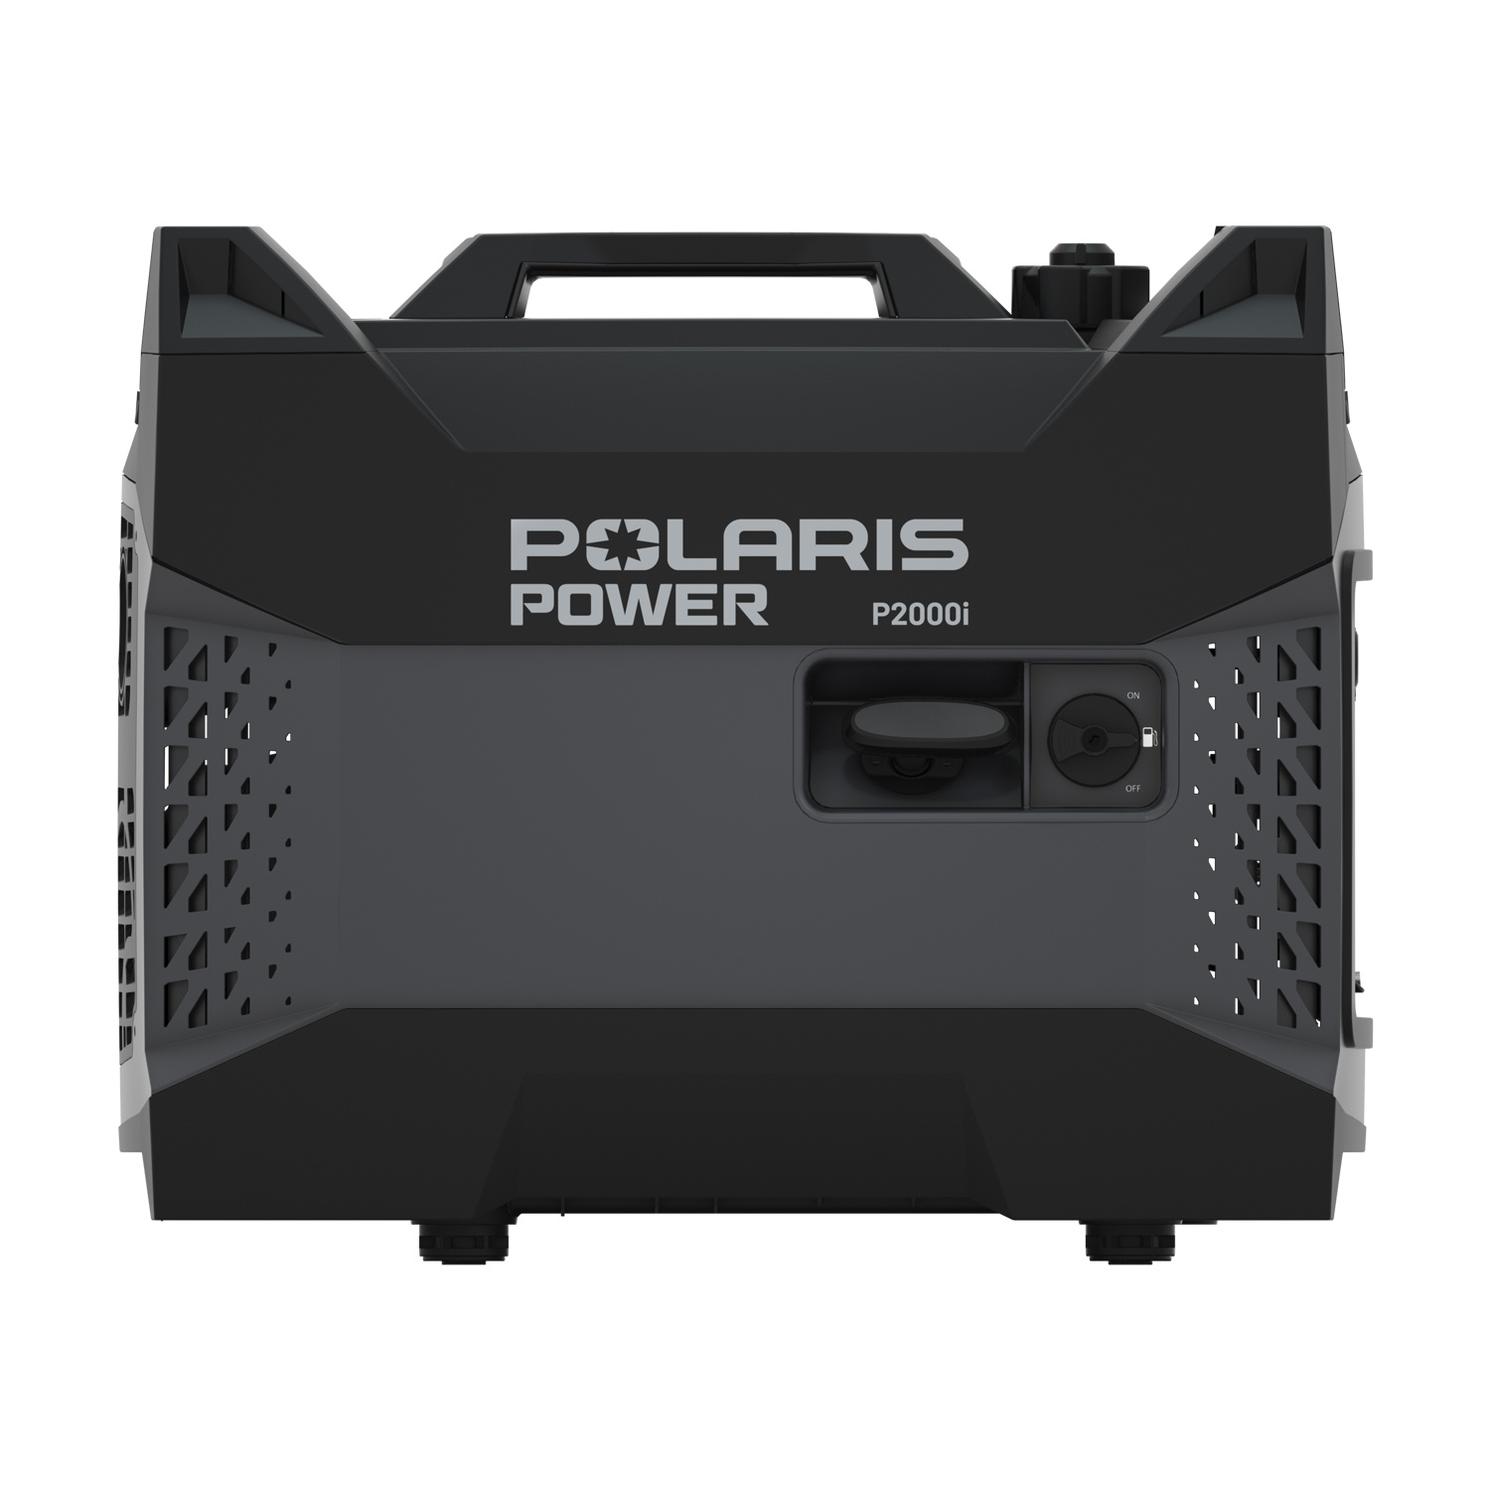 Polaris Power Portable Inverter Generator P2000i 2022